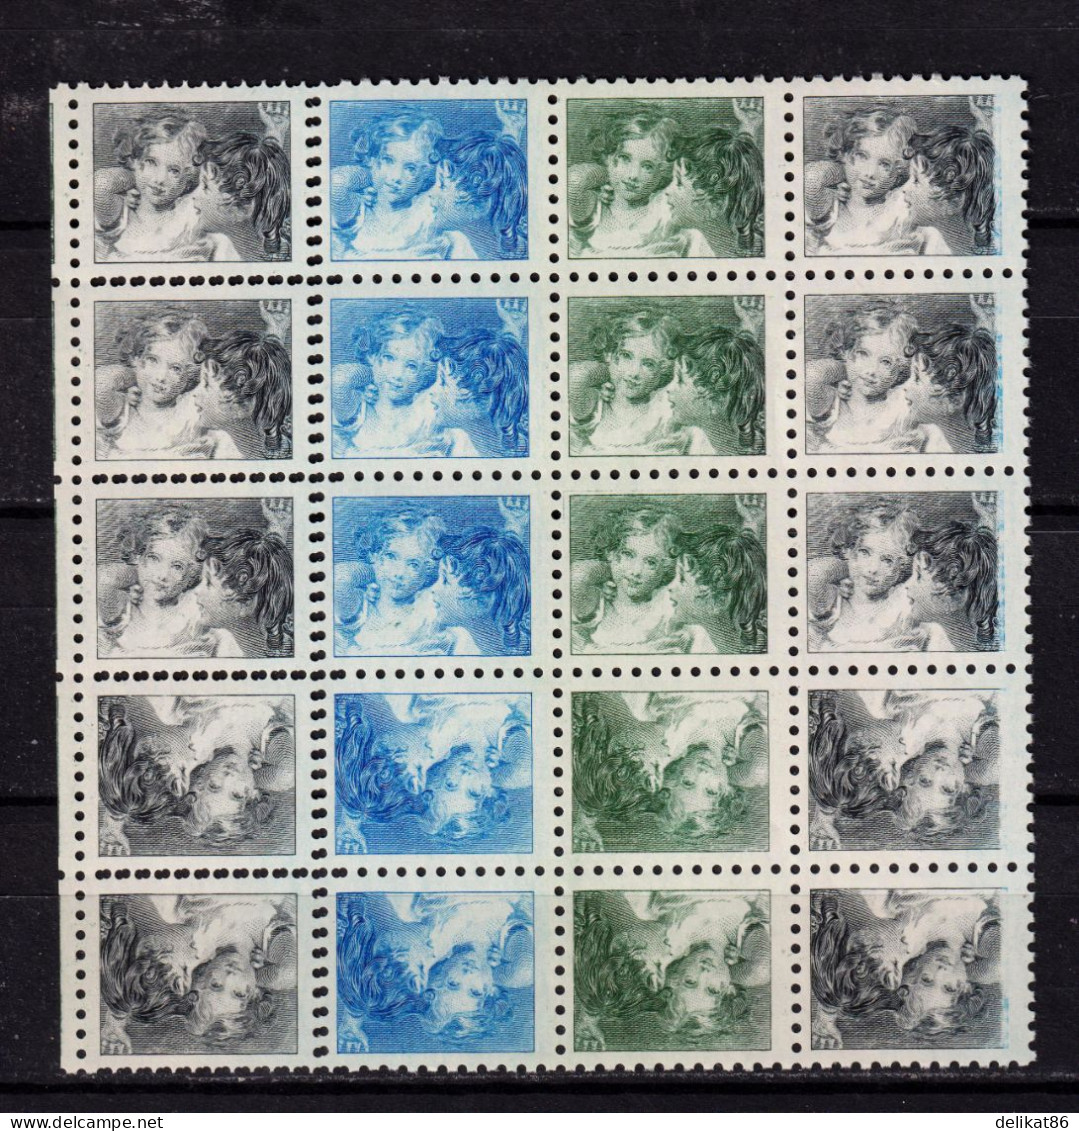 Probedruck Test Stamp Maschinprobe Specimen Canada 1935 Baby Sister - Ensayos & Reimpresiones